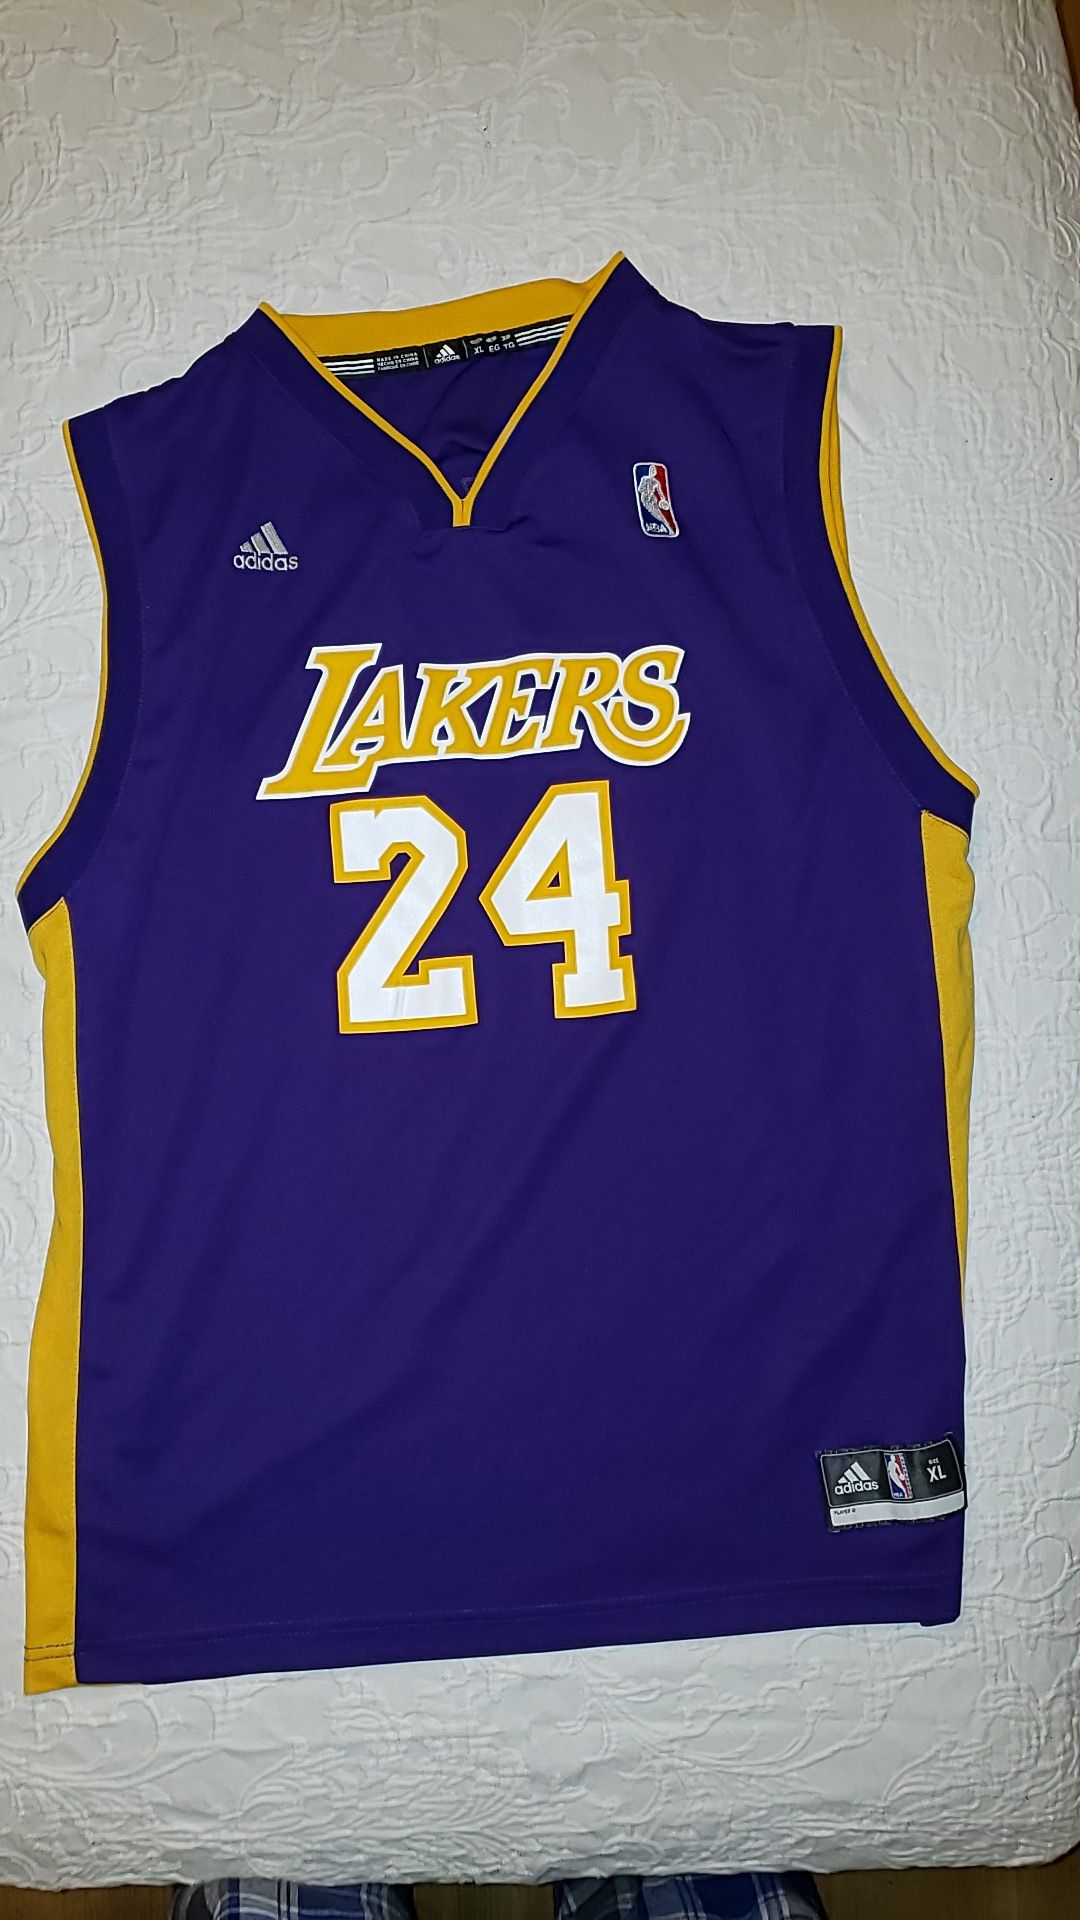 24 Kobe Bryant Lakers Jersey. Size XL